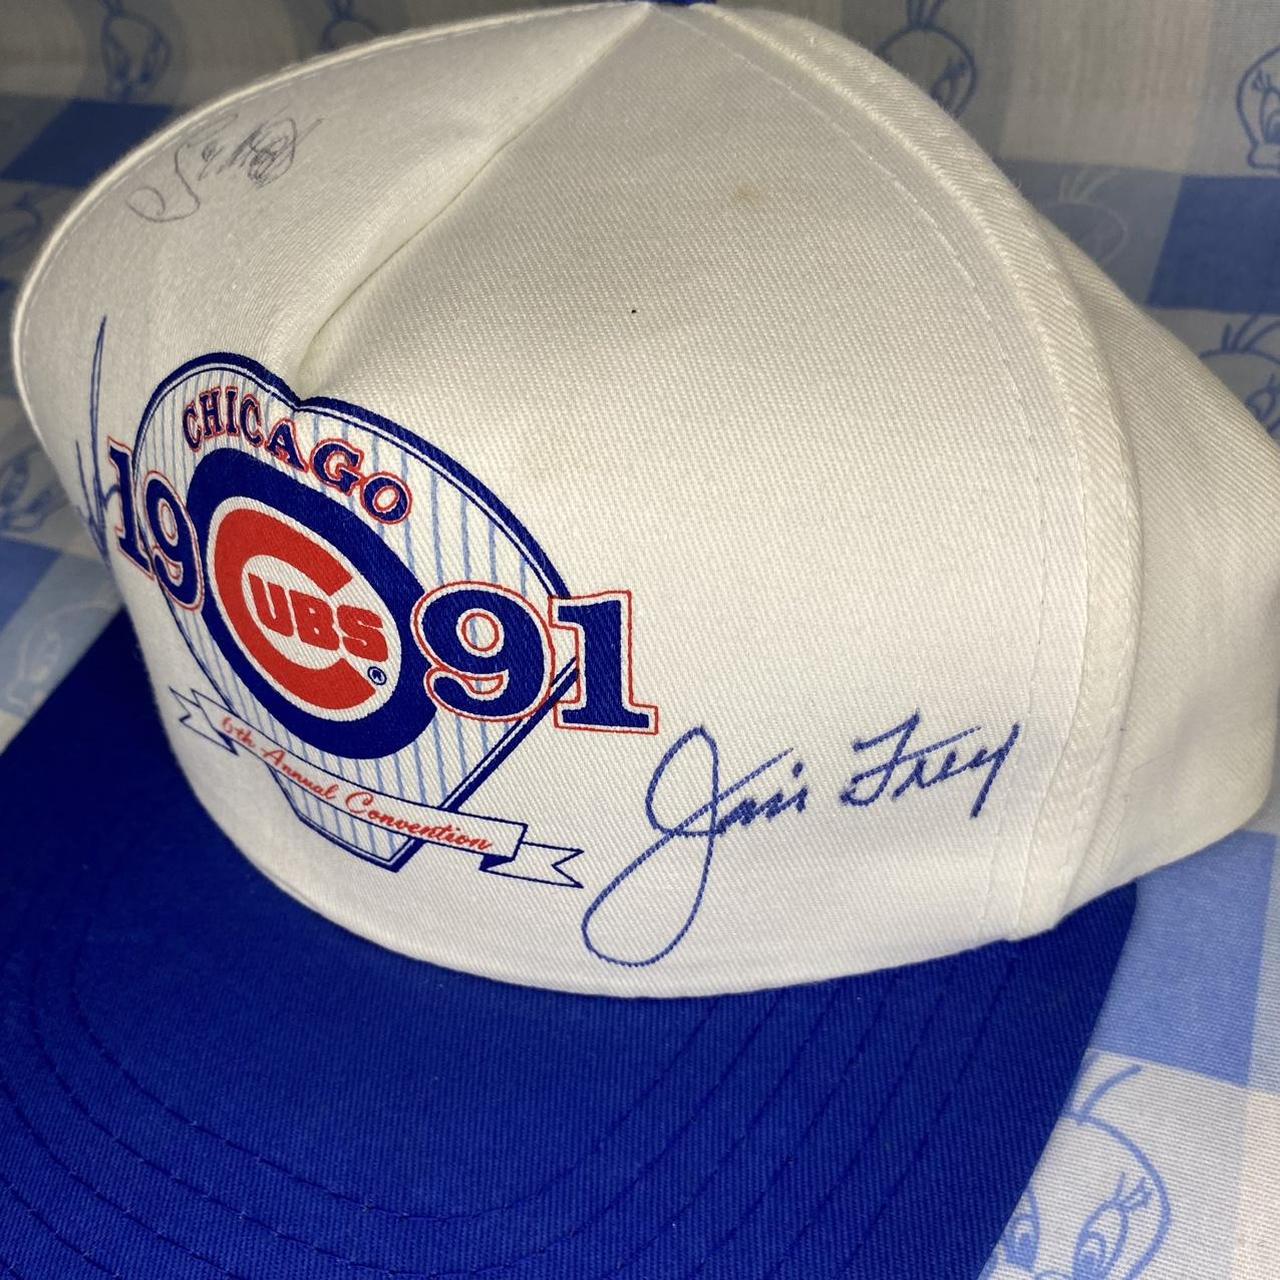 Vintage 1991 Chicago Cubs Autographed and - Depop